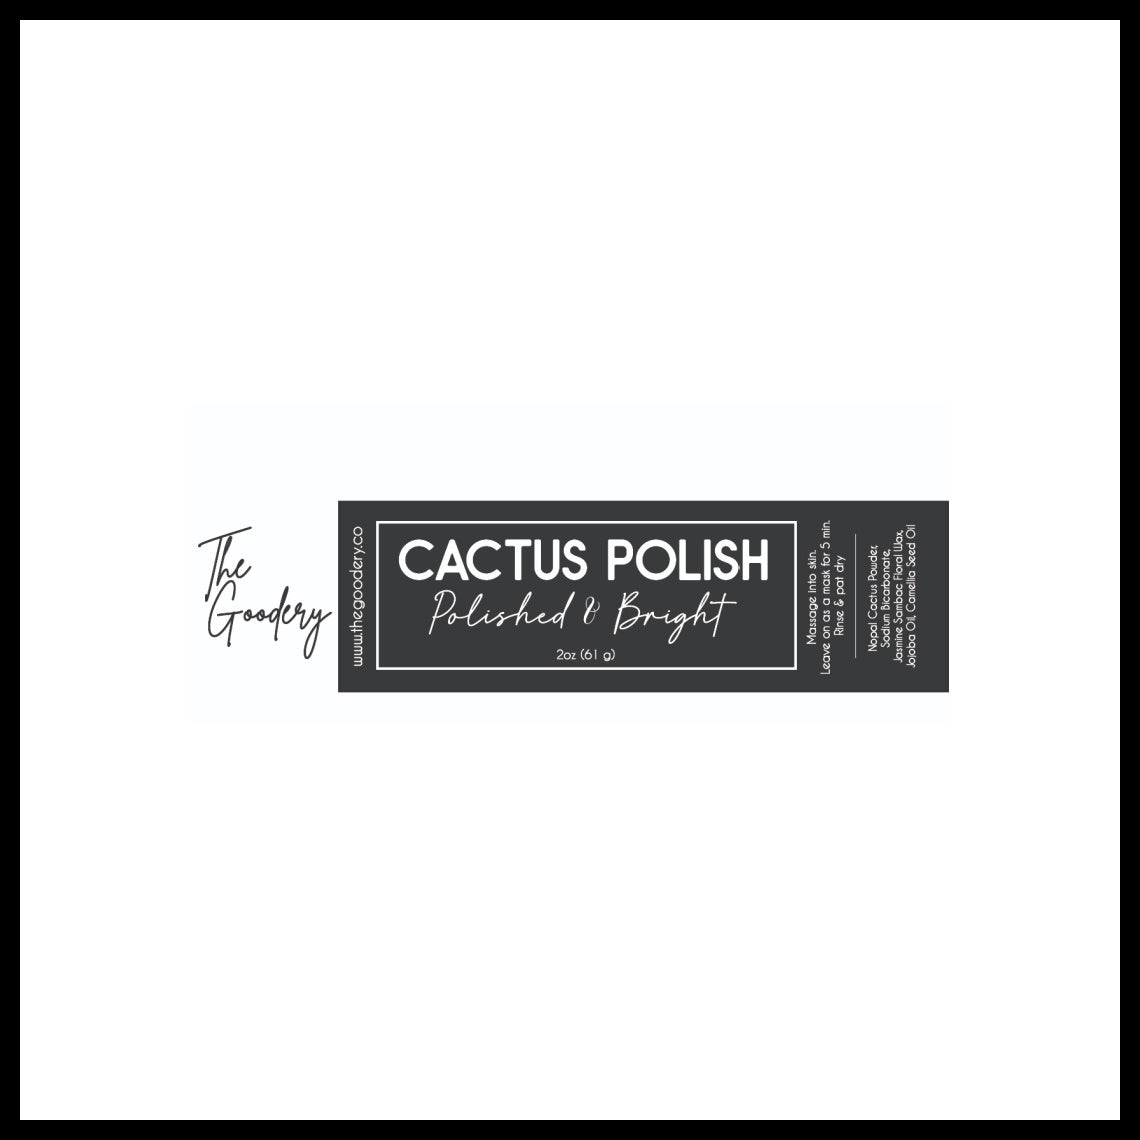 CACTUS POLISH